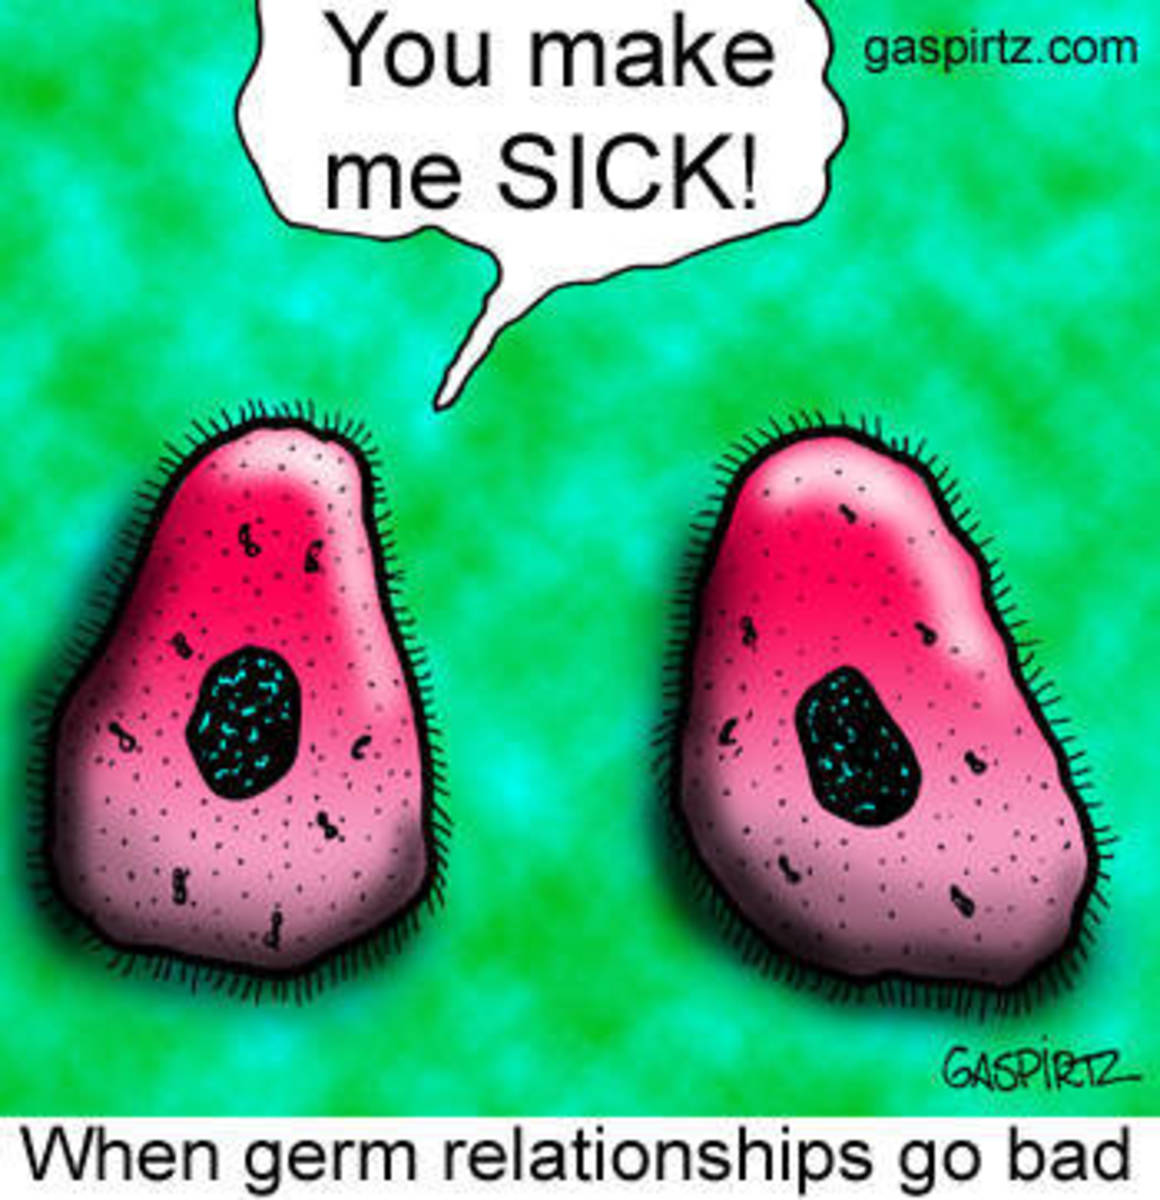 Germs make us sick.